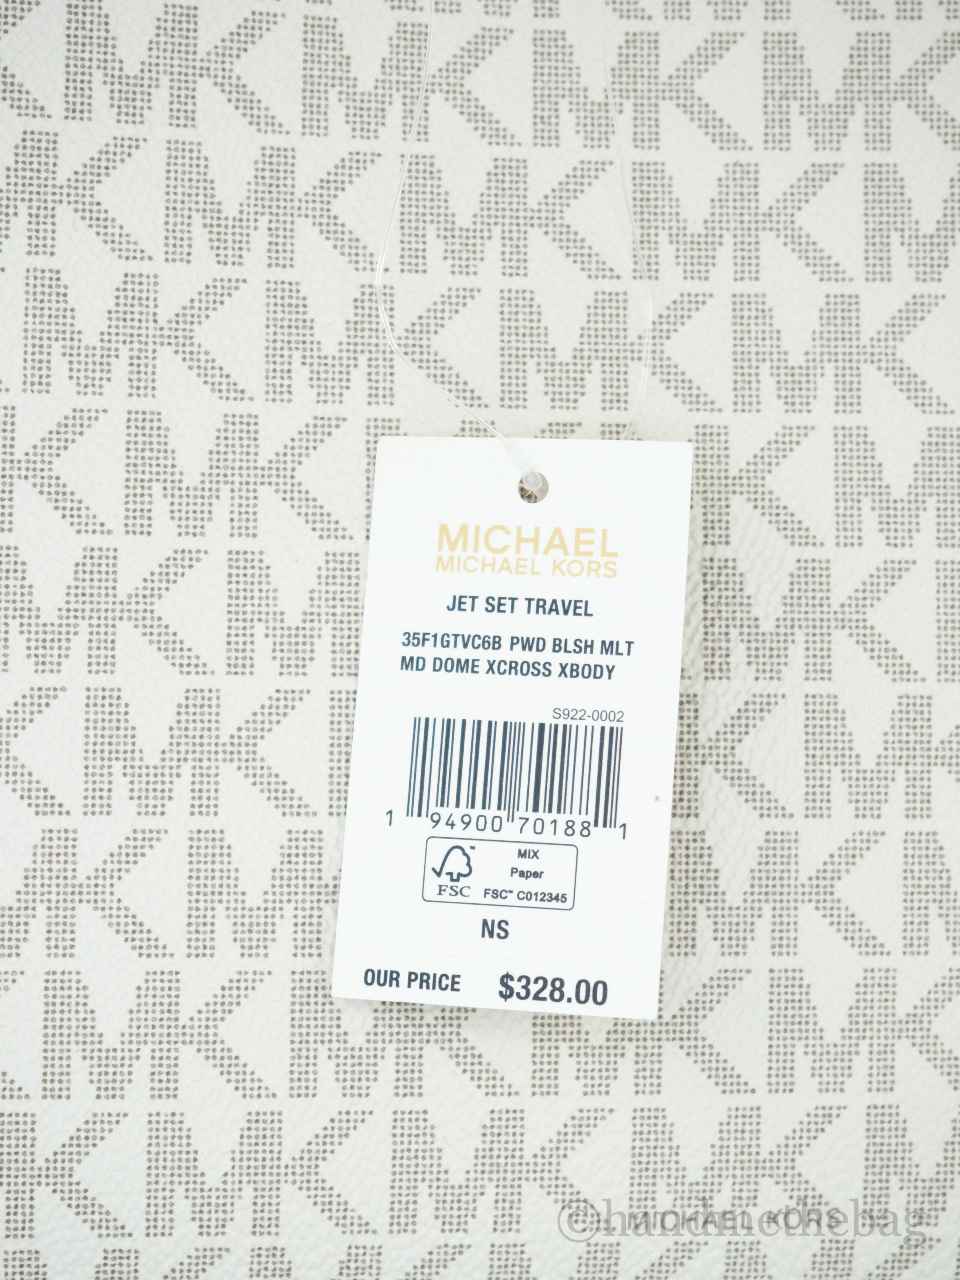 Michael Kors jet set vanilla powder blush x dome tag on white background